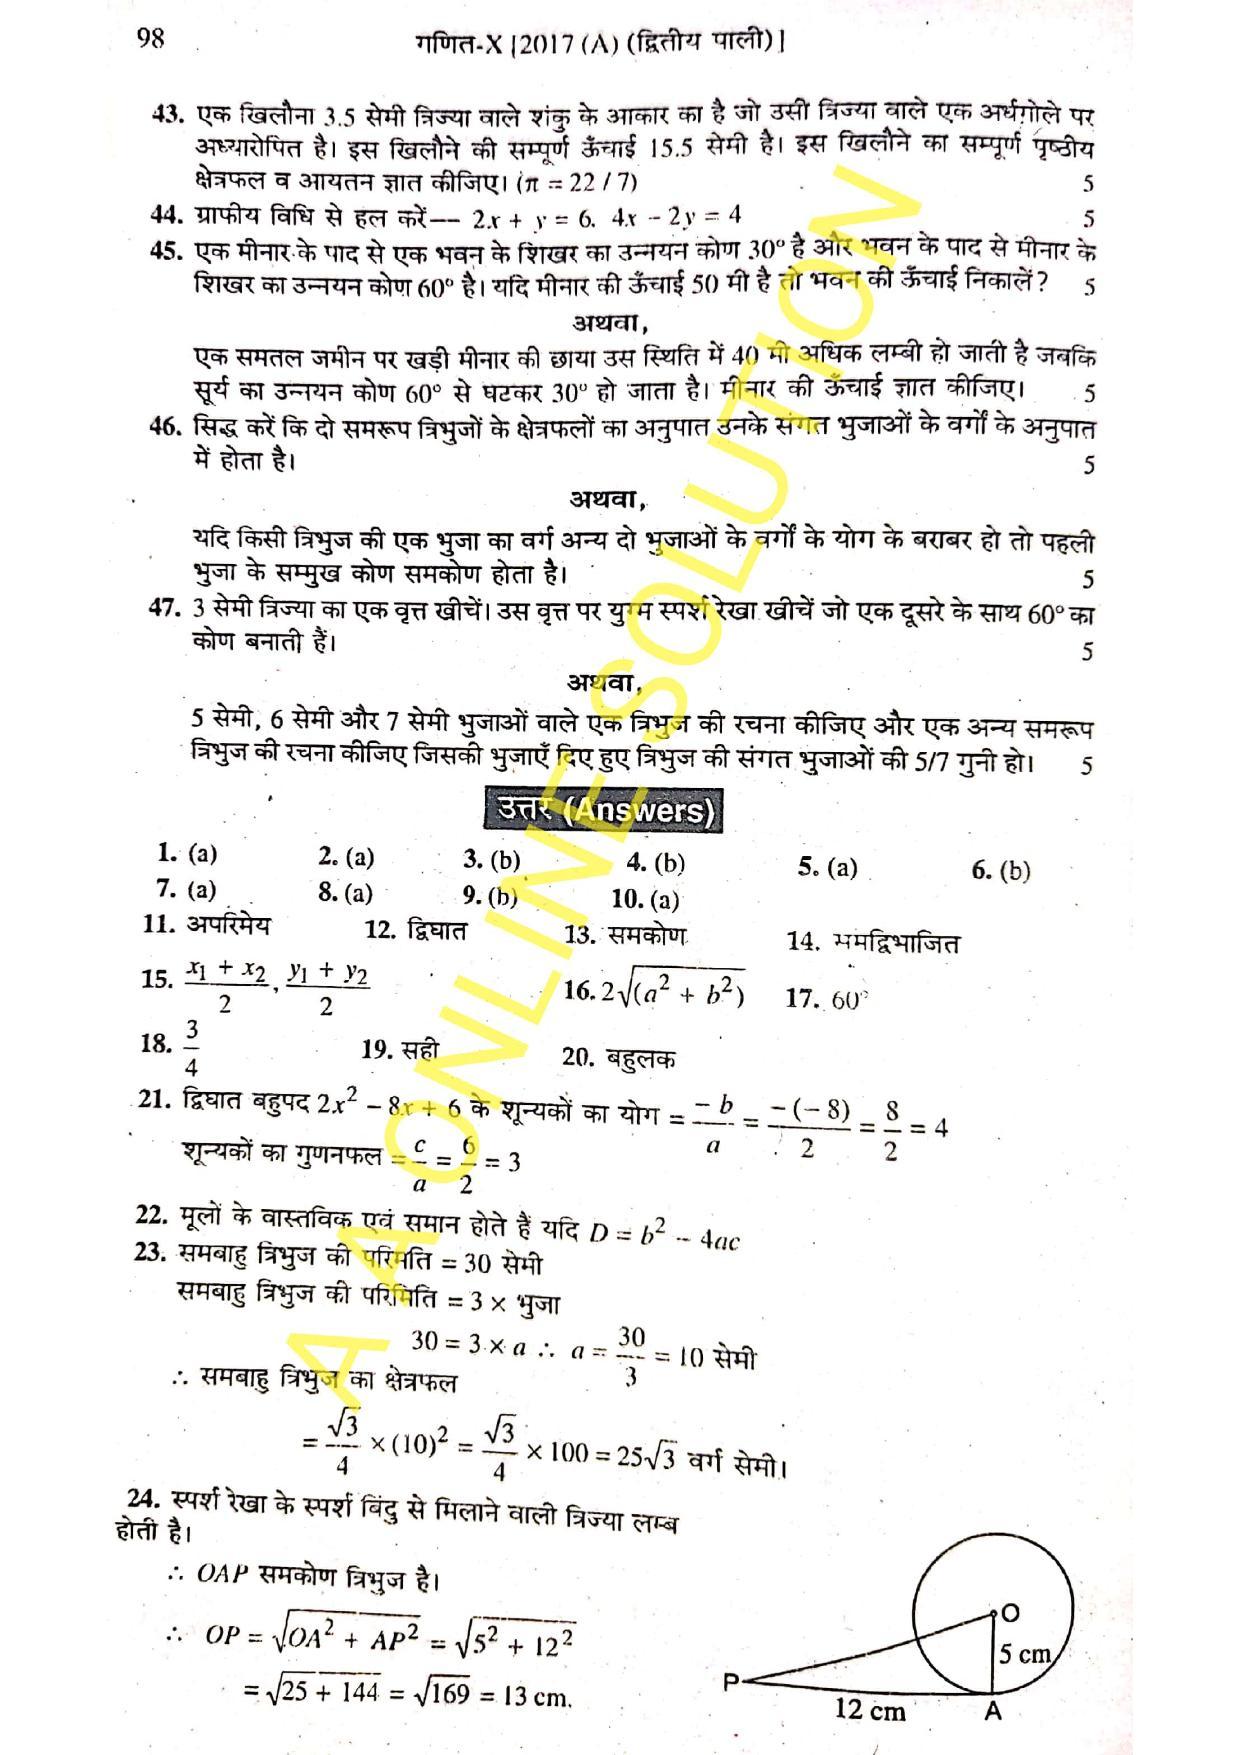 Bihar Board Class 10 Maths 2017 (2nd Sitting) Question Paper - Page 3